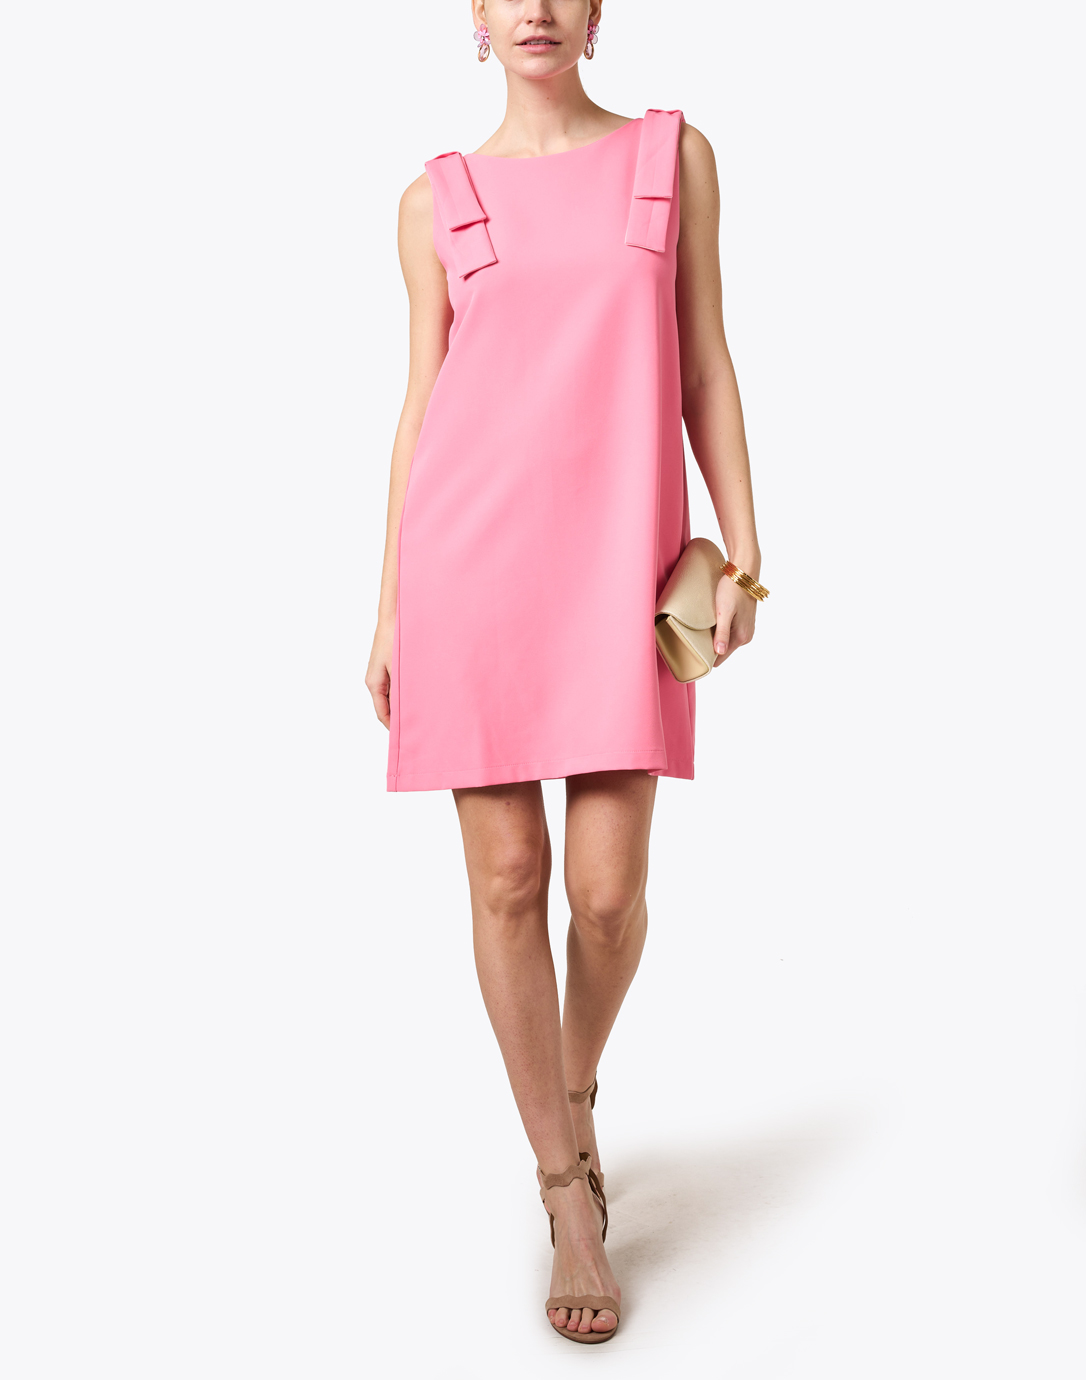 Kate Spade Pink Bow Dress